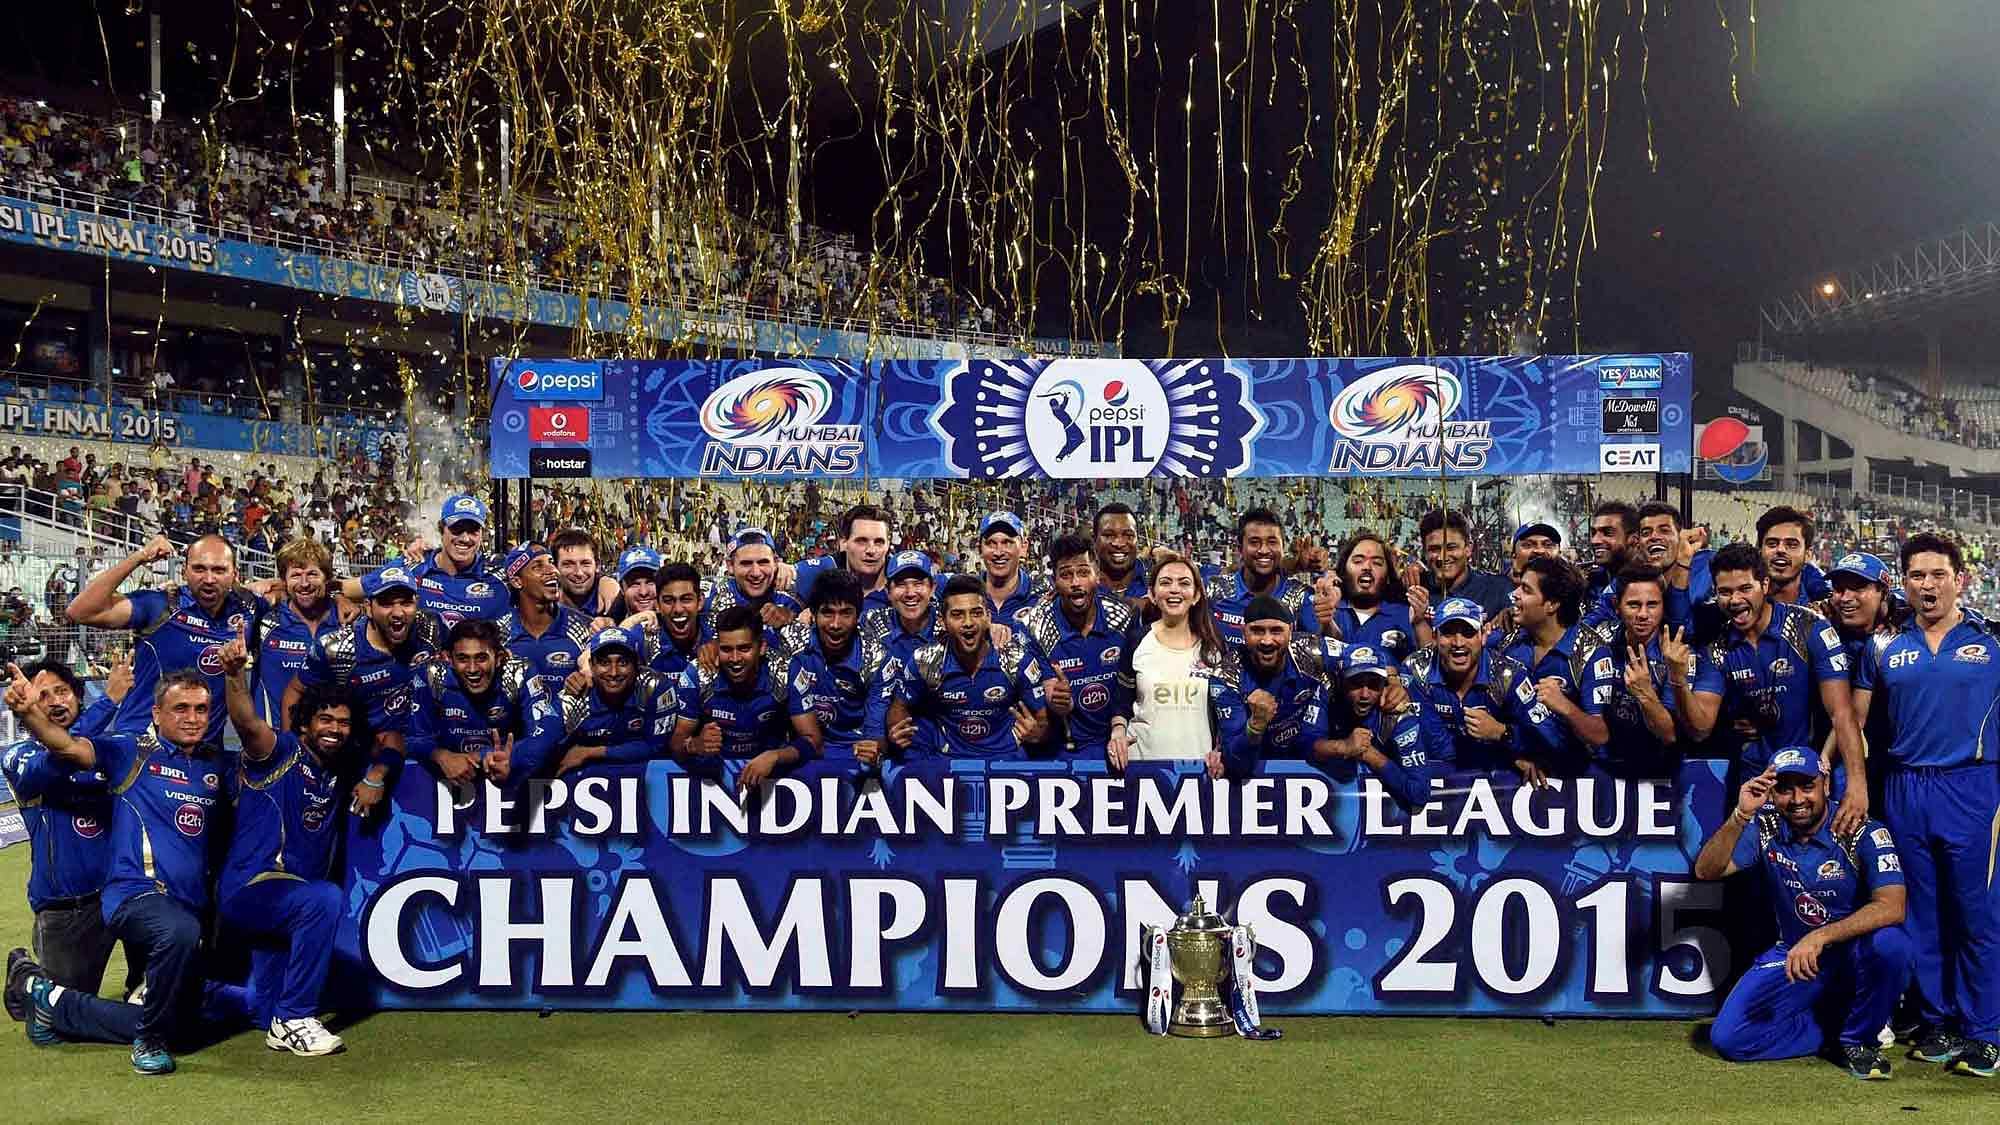 Mumbai Indians won the title in 2015. (Photo: PTI)